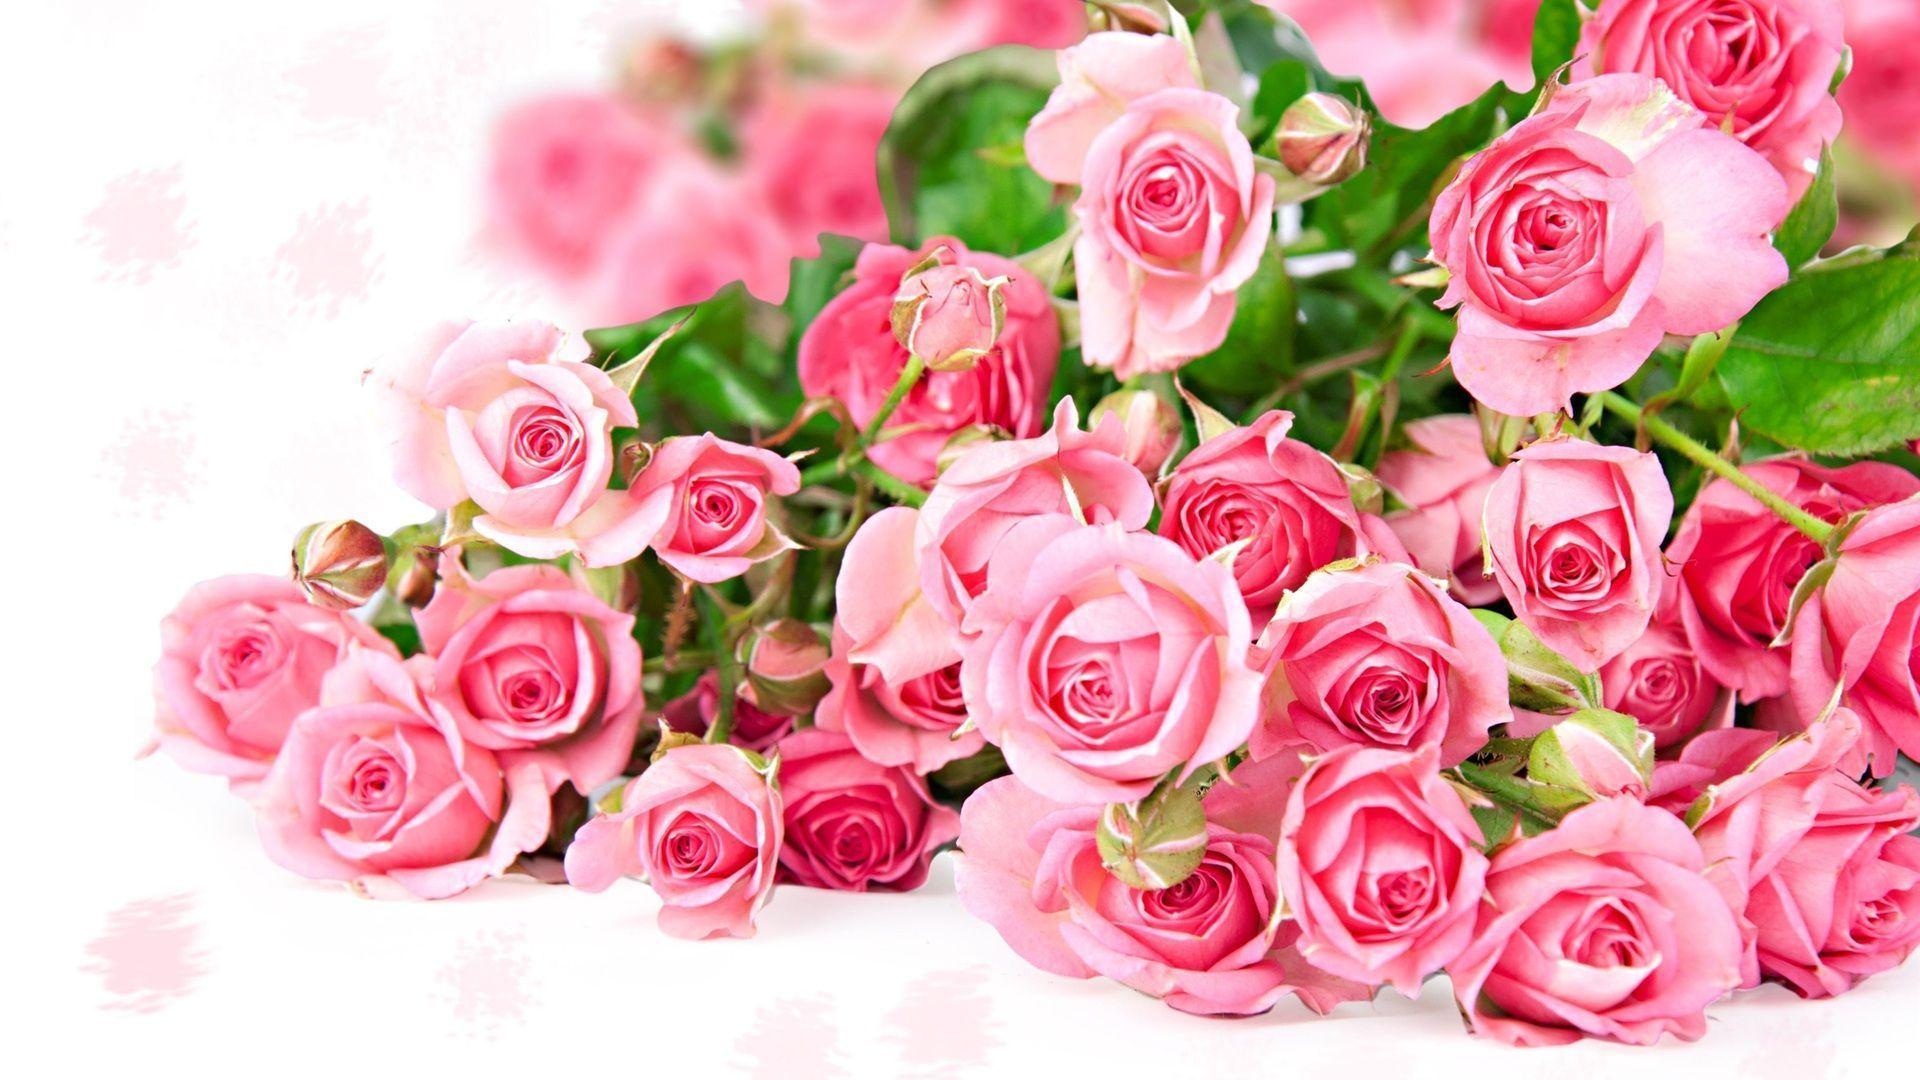 world beautiful rose flowers wallpaper